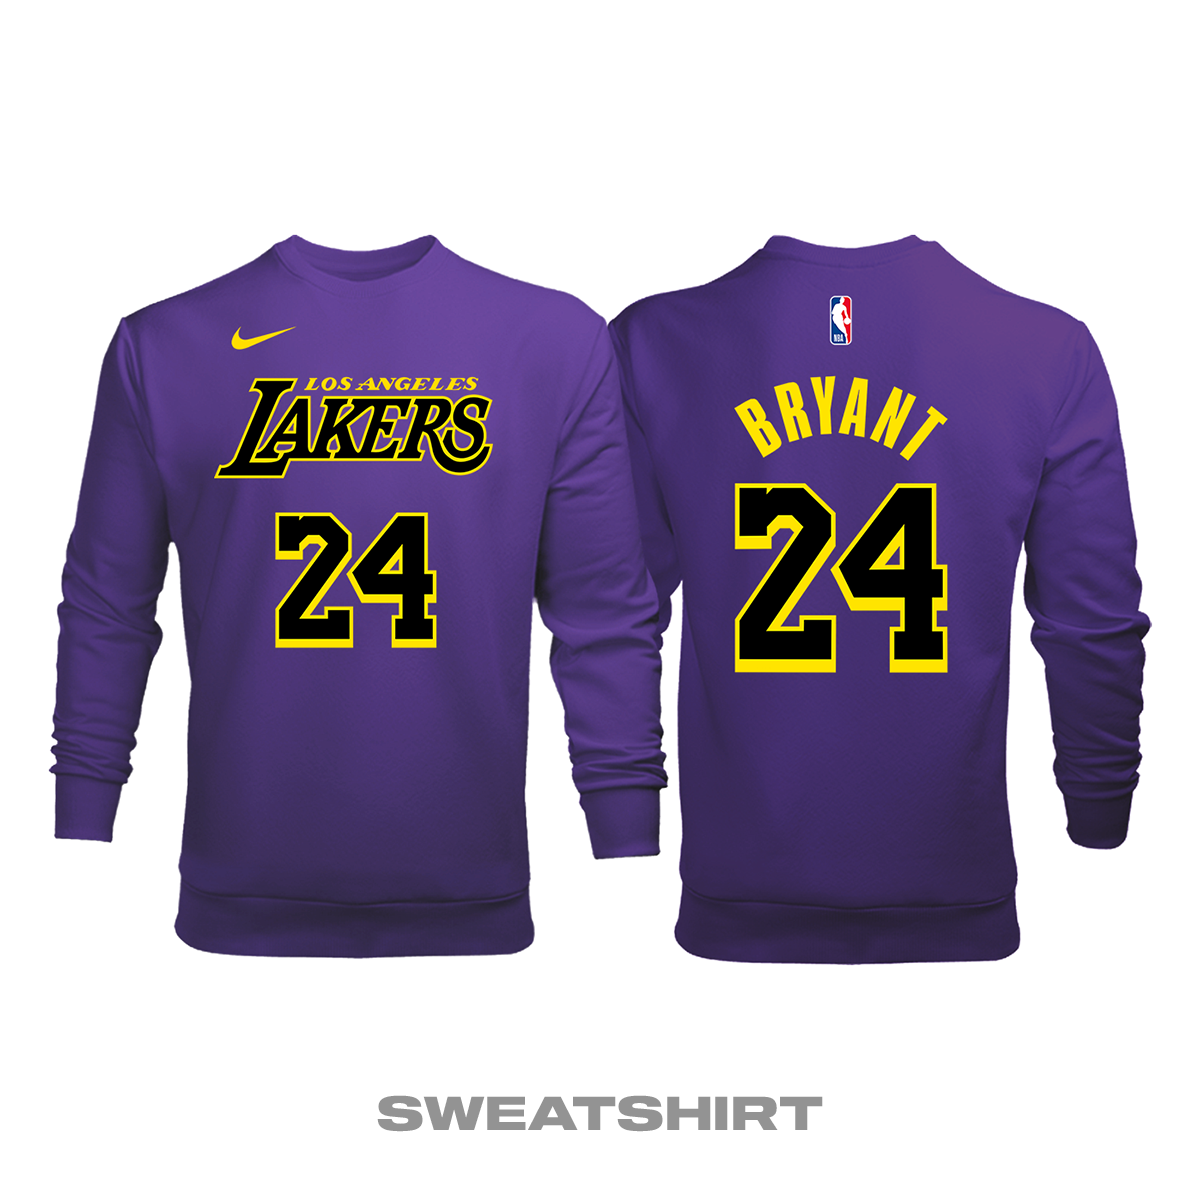 Los Angeles Lakers: City Edition 2018/2019 Sweatshirt